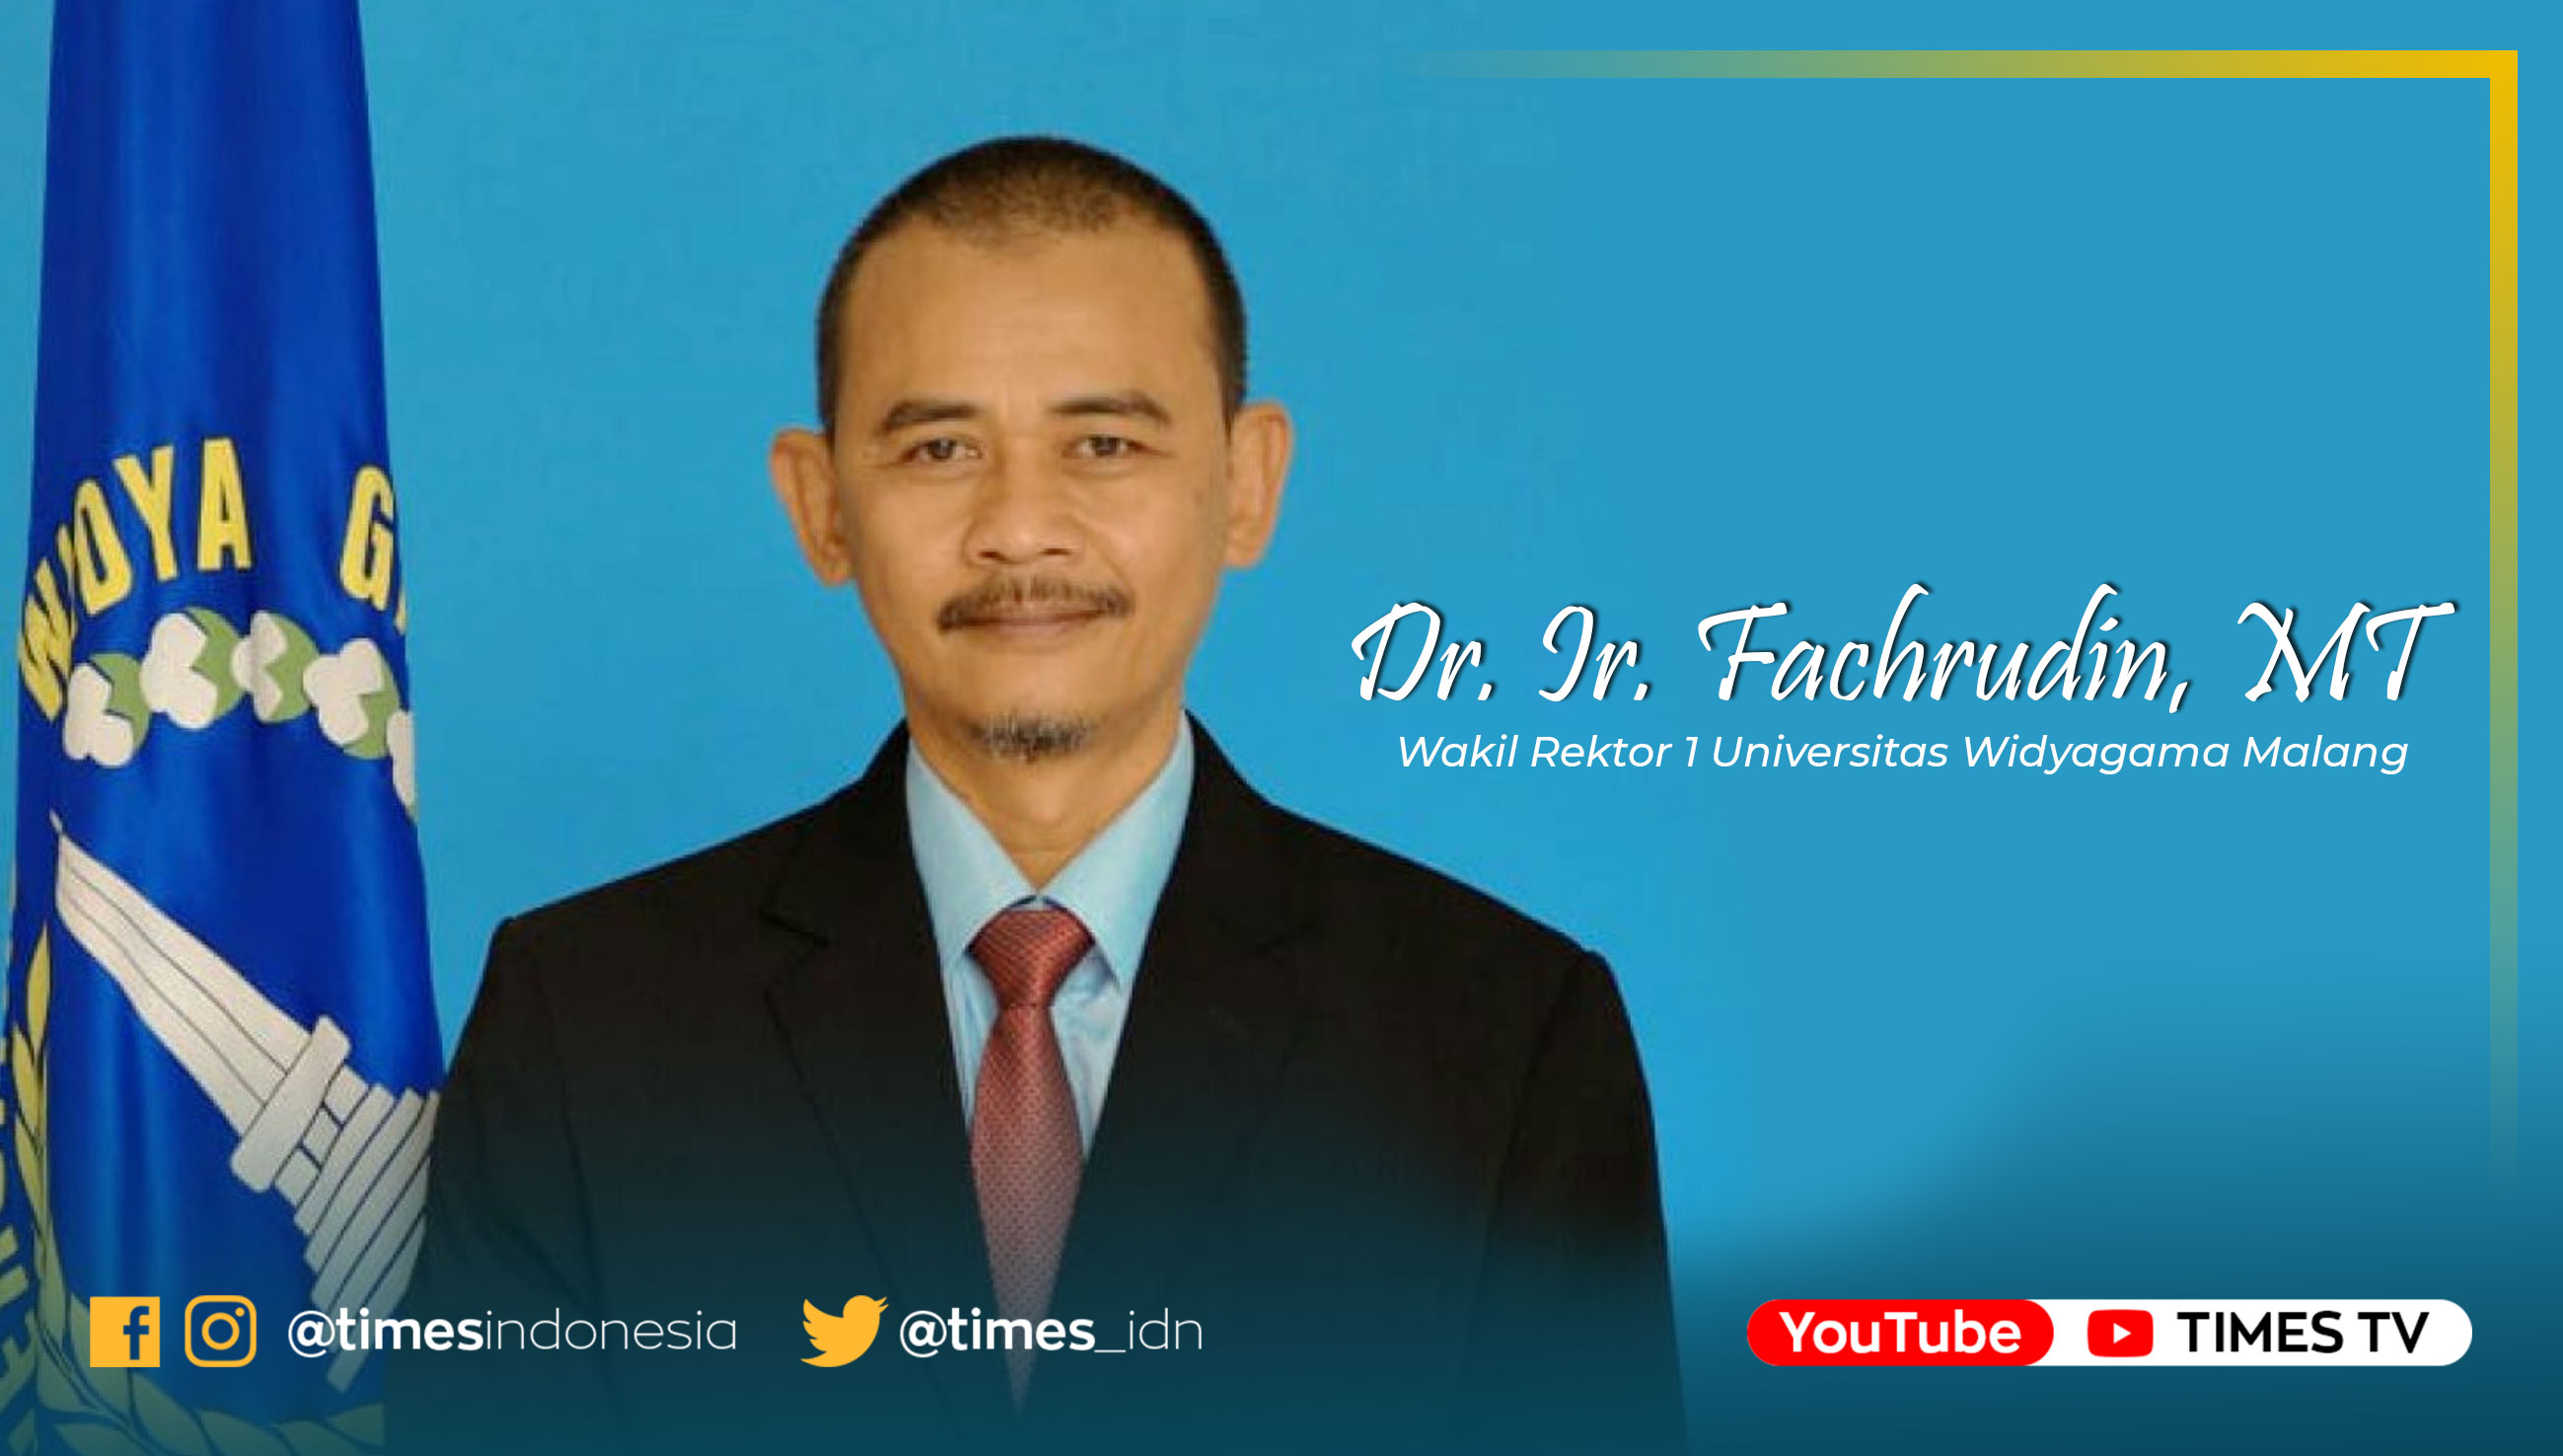 Wakil rektor 1, Dr. Ir. Fachrudin, MT